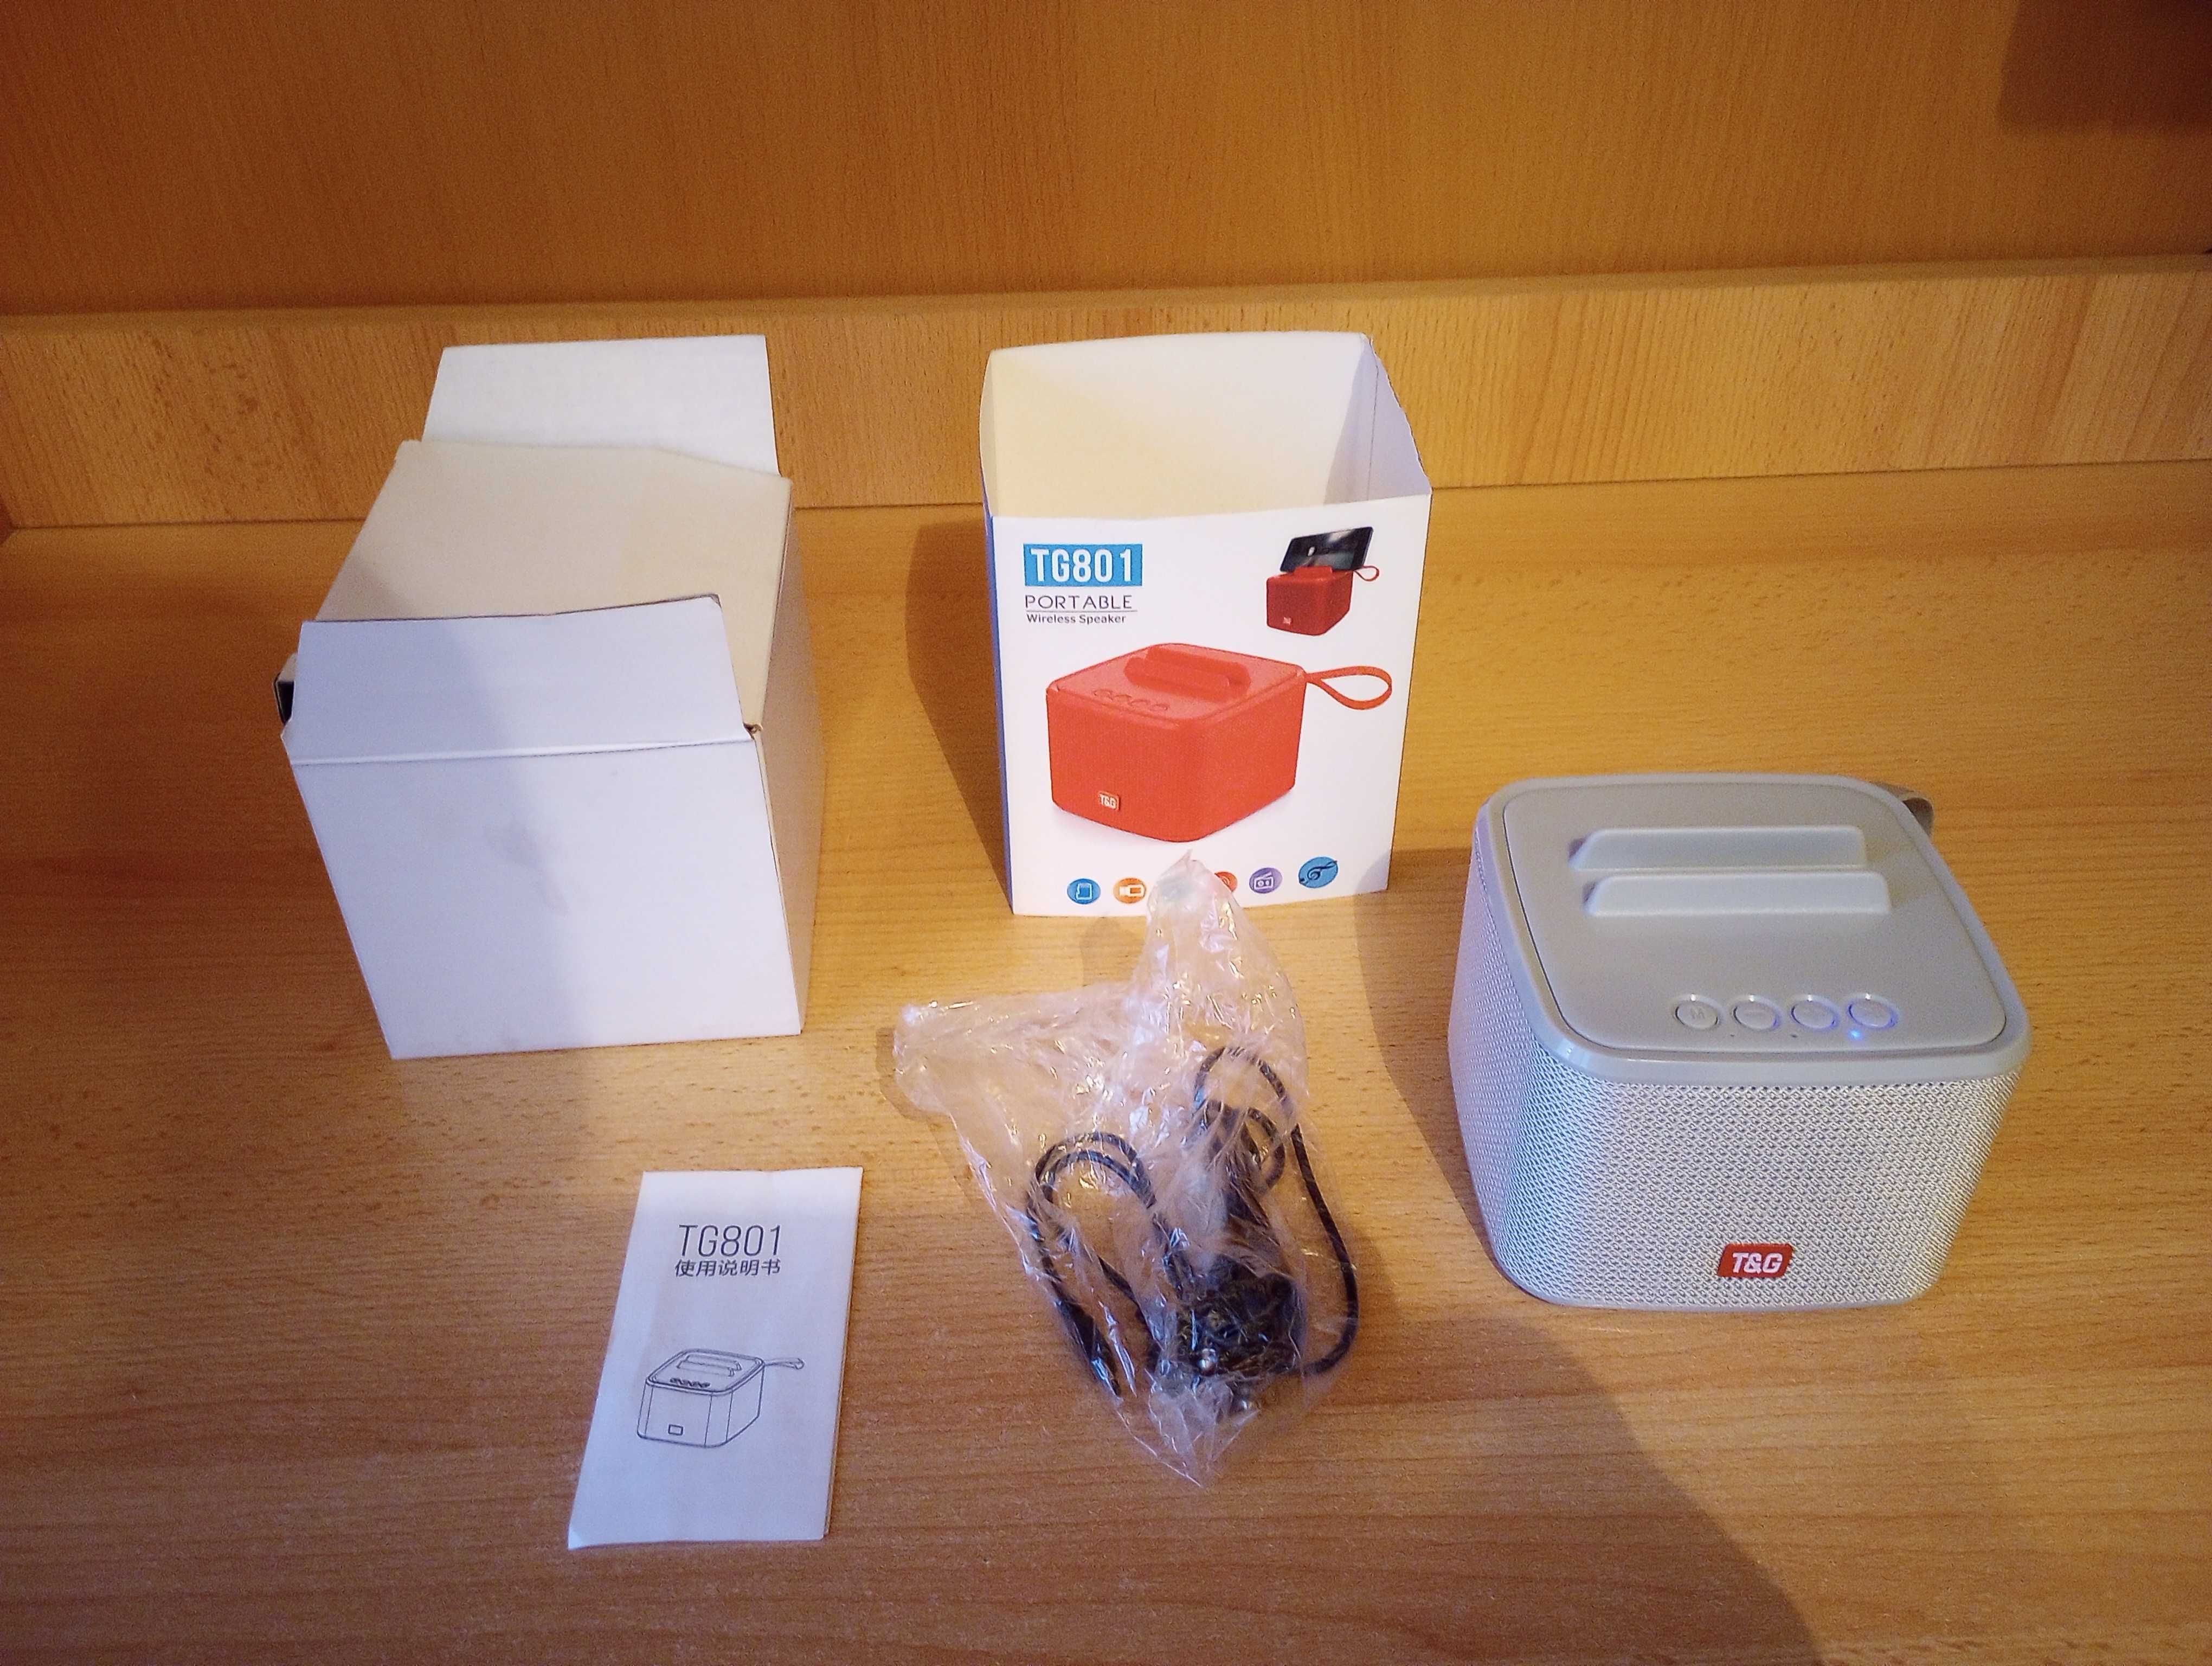 Портативная Bluetooth колонка + подставка TG-801 радио, флешки, блютуз